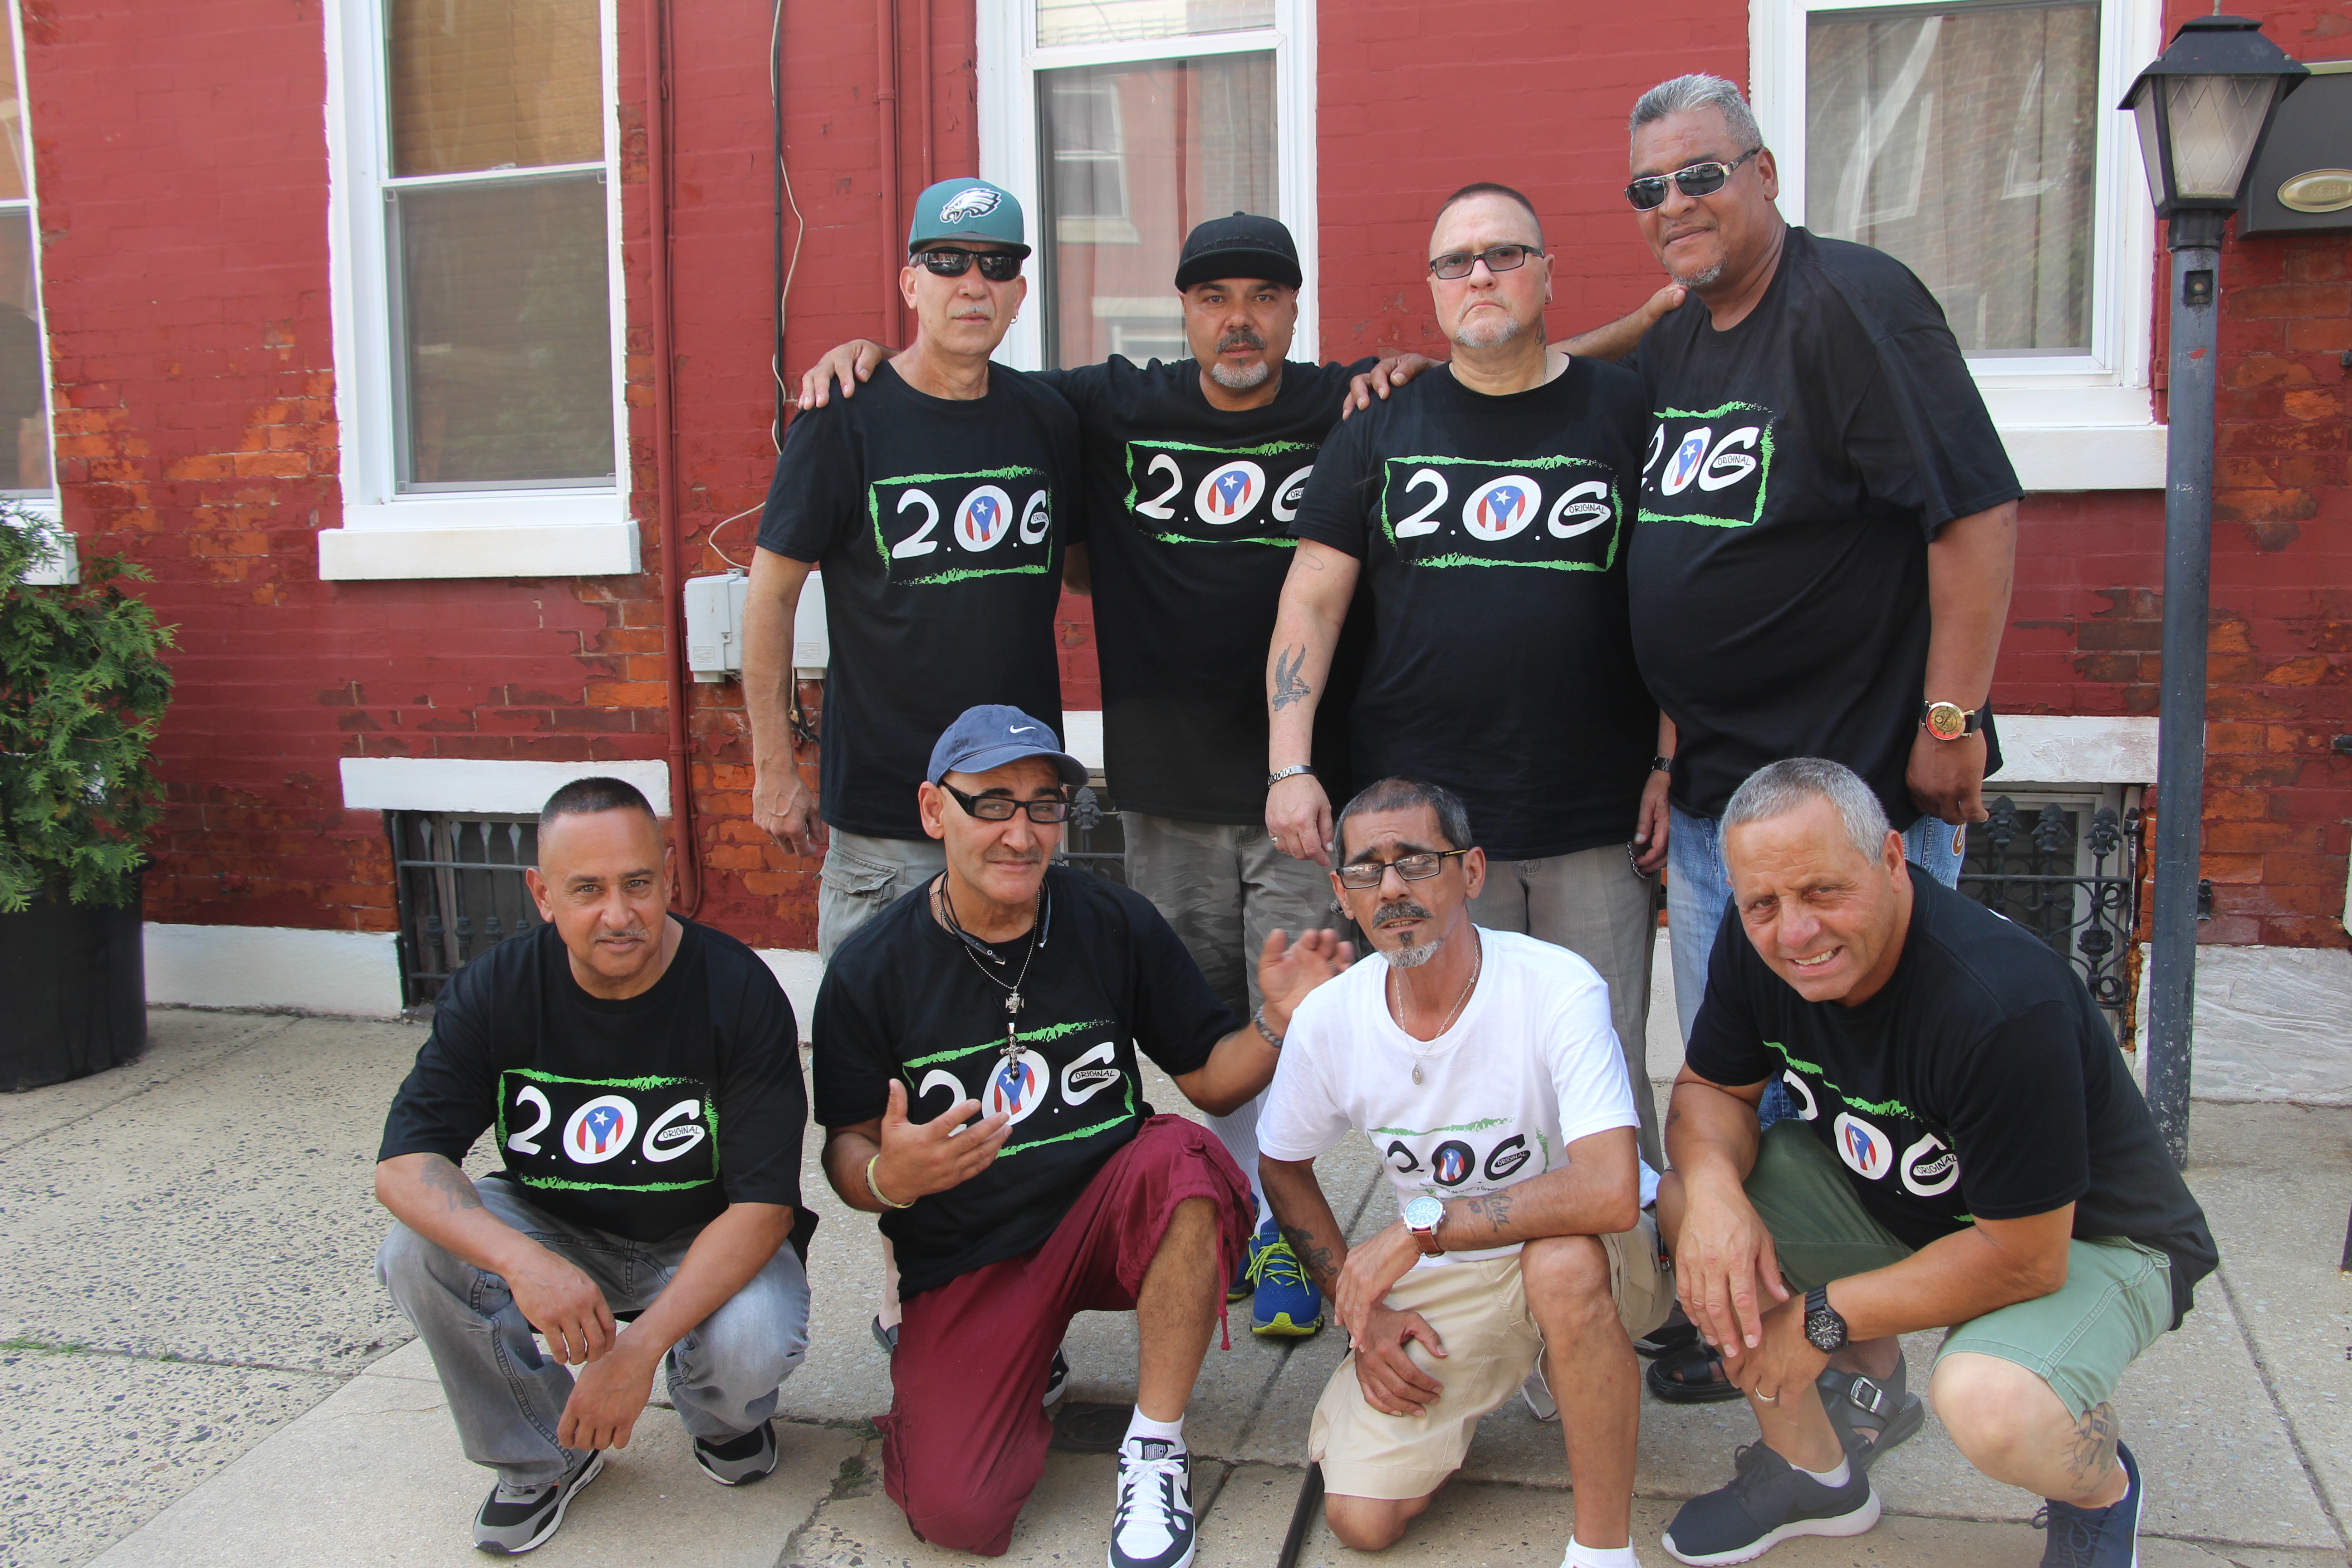 Miembros originales de la 20G (Izq. a der.): T-Bone, Hip, Sunshine, Rico. Imagen inferior (izq. a der.) : Gaucho, Crip, Nate y Bert.
 
 
